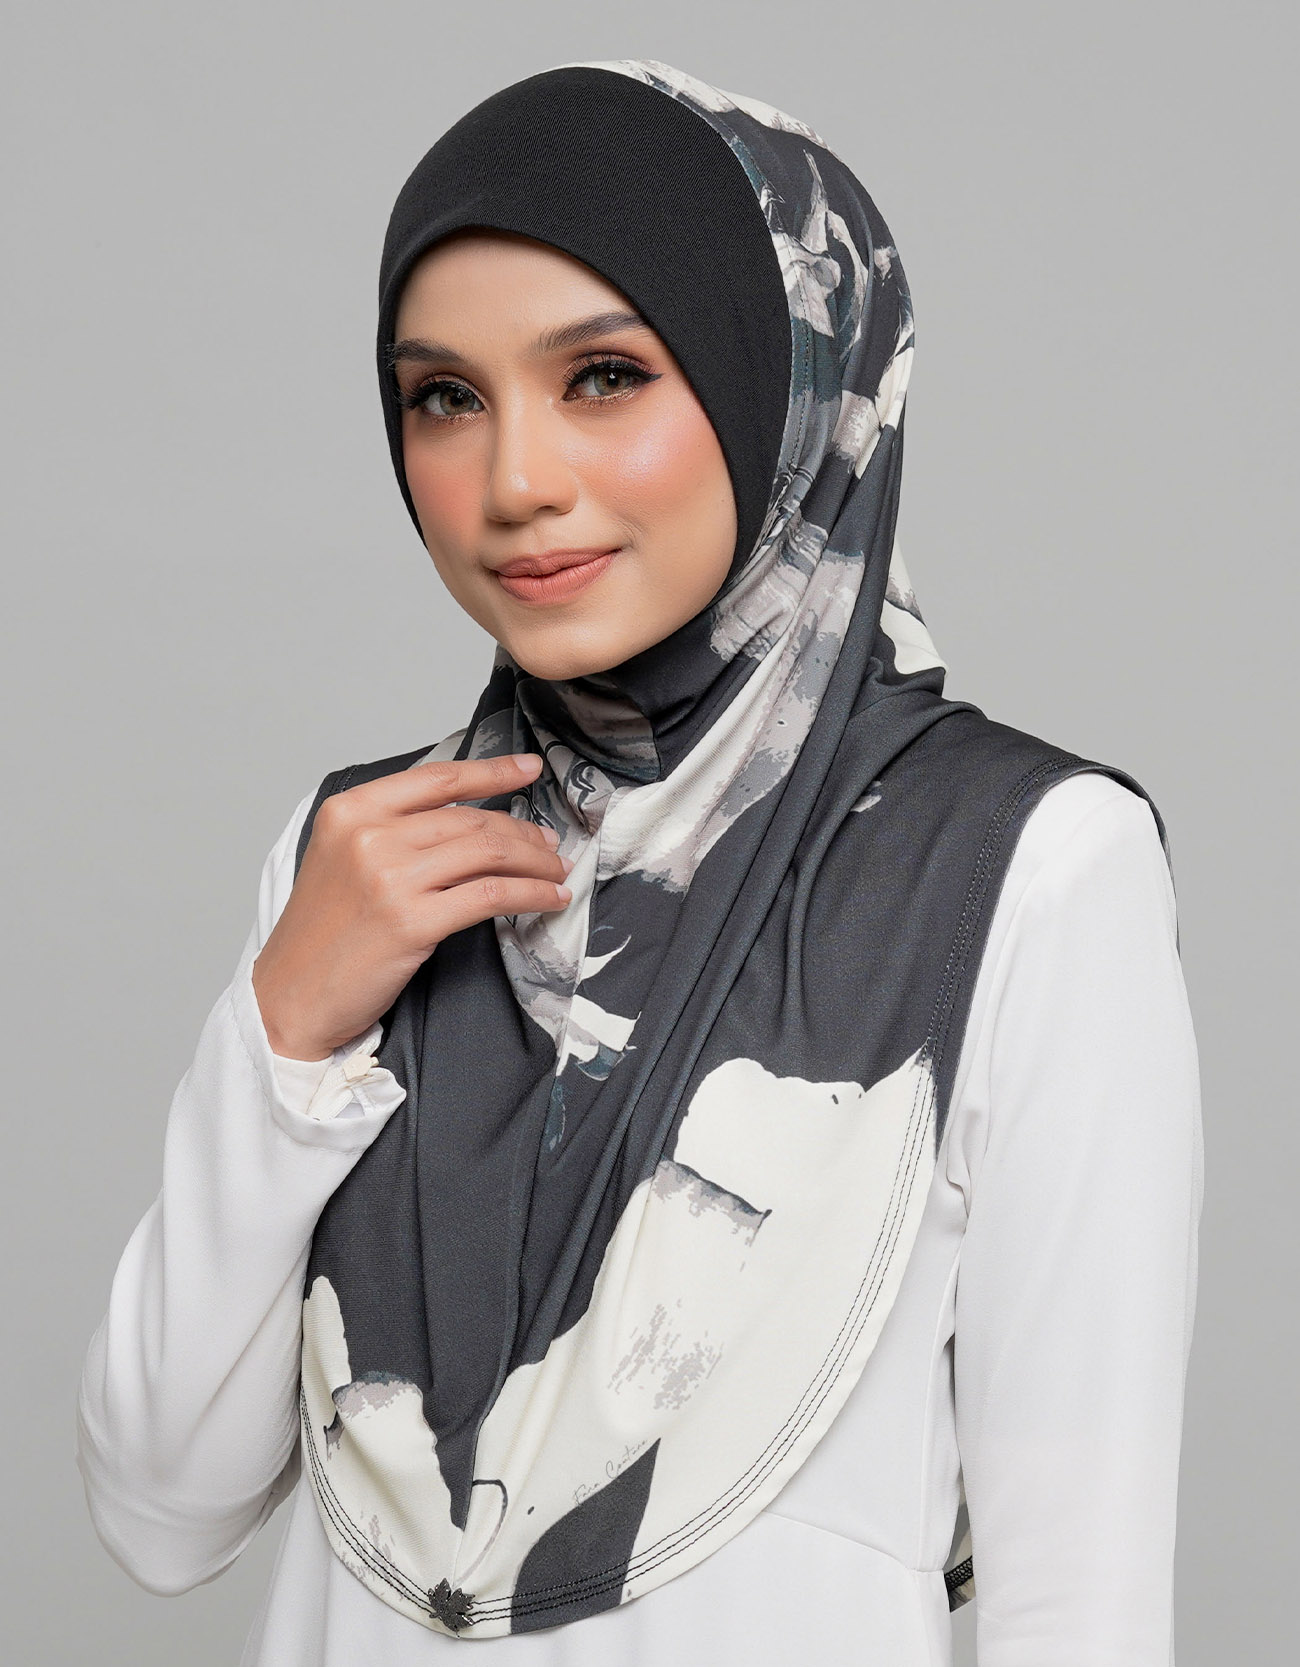 Express Hijab Damia Signature 08 - Black Edition&w=300&zc=1